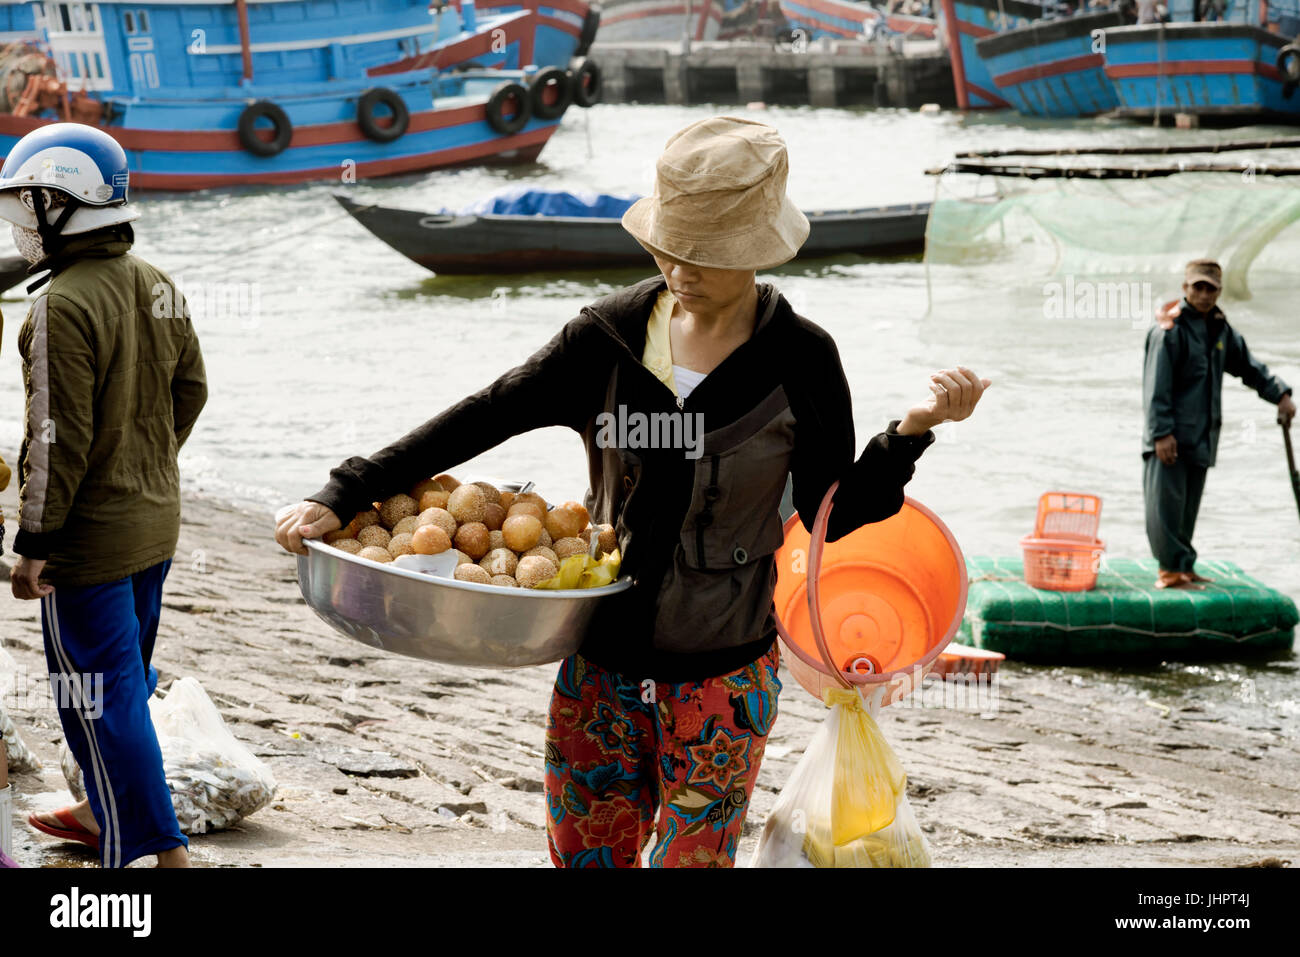 Vietnamese woman carrying a large bowl with deep fried sweet bread (Mantou). December 26, 2013 - Da Nang, Vietnam Stock Photo